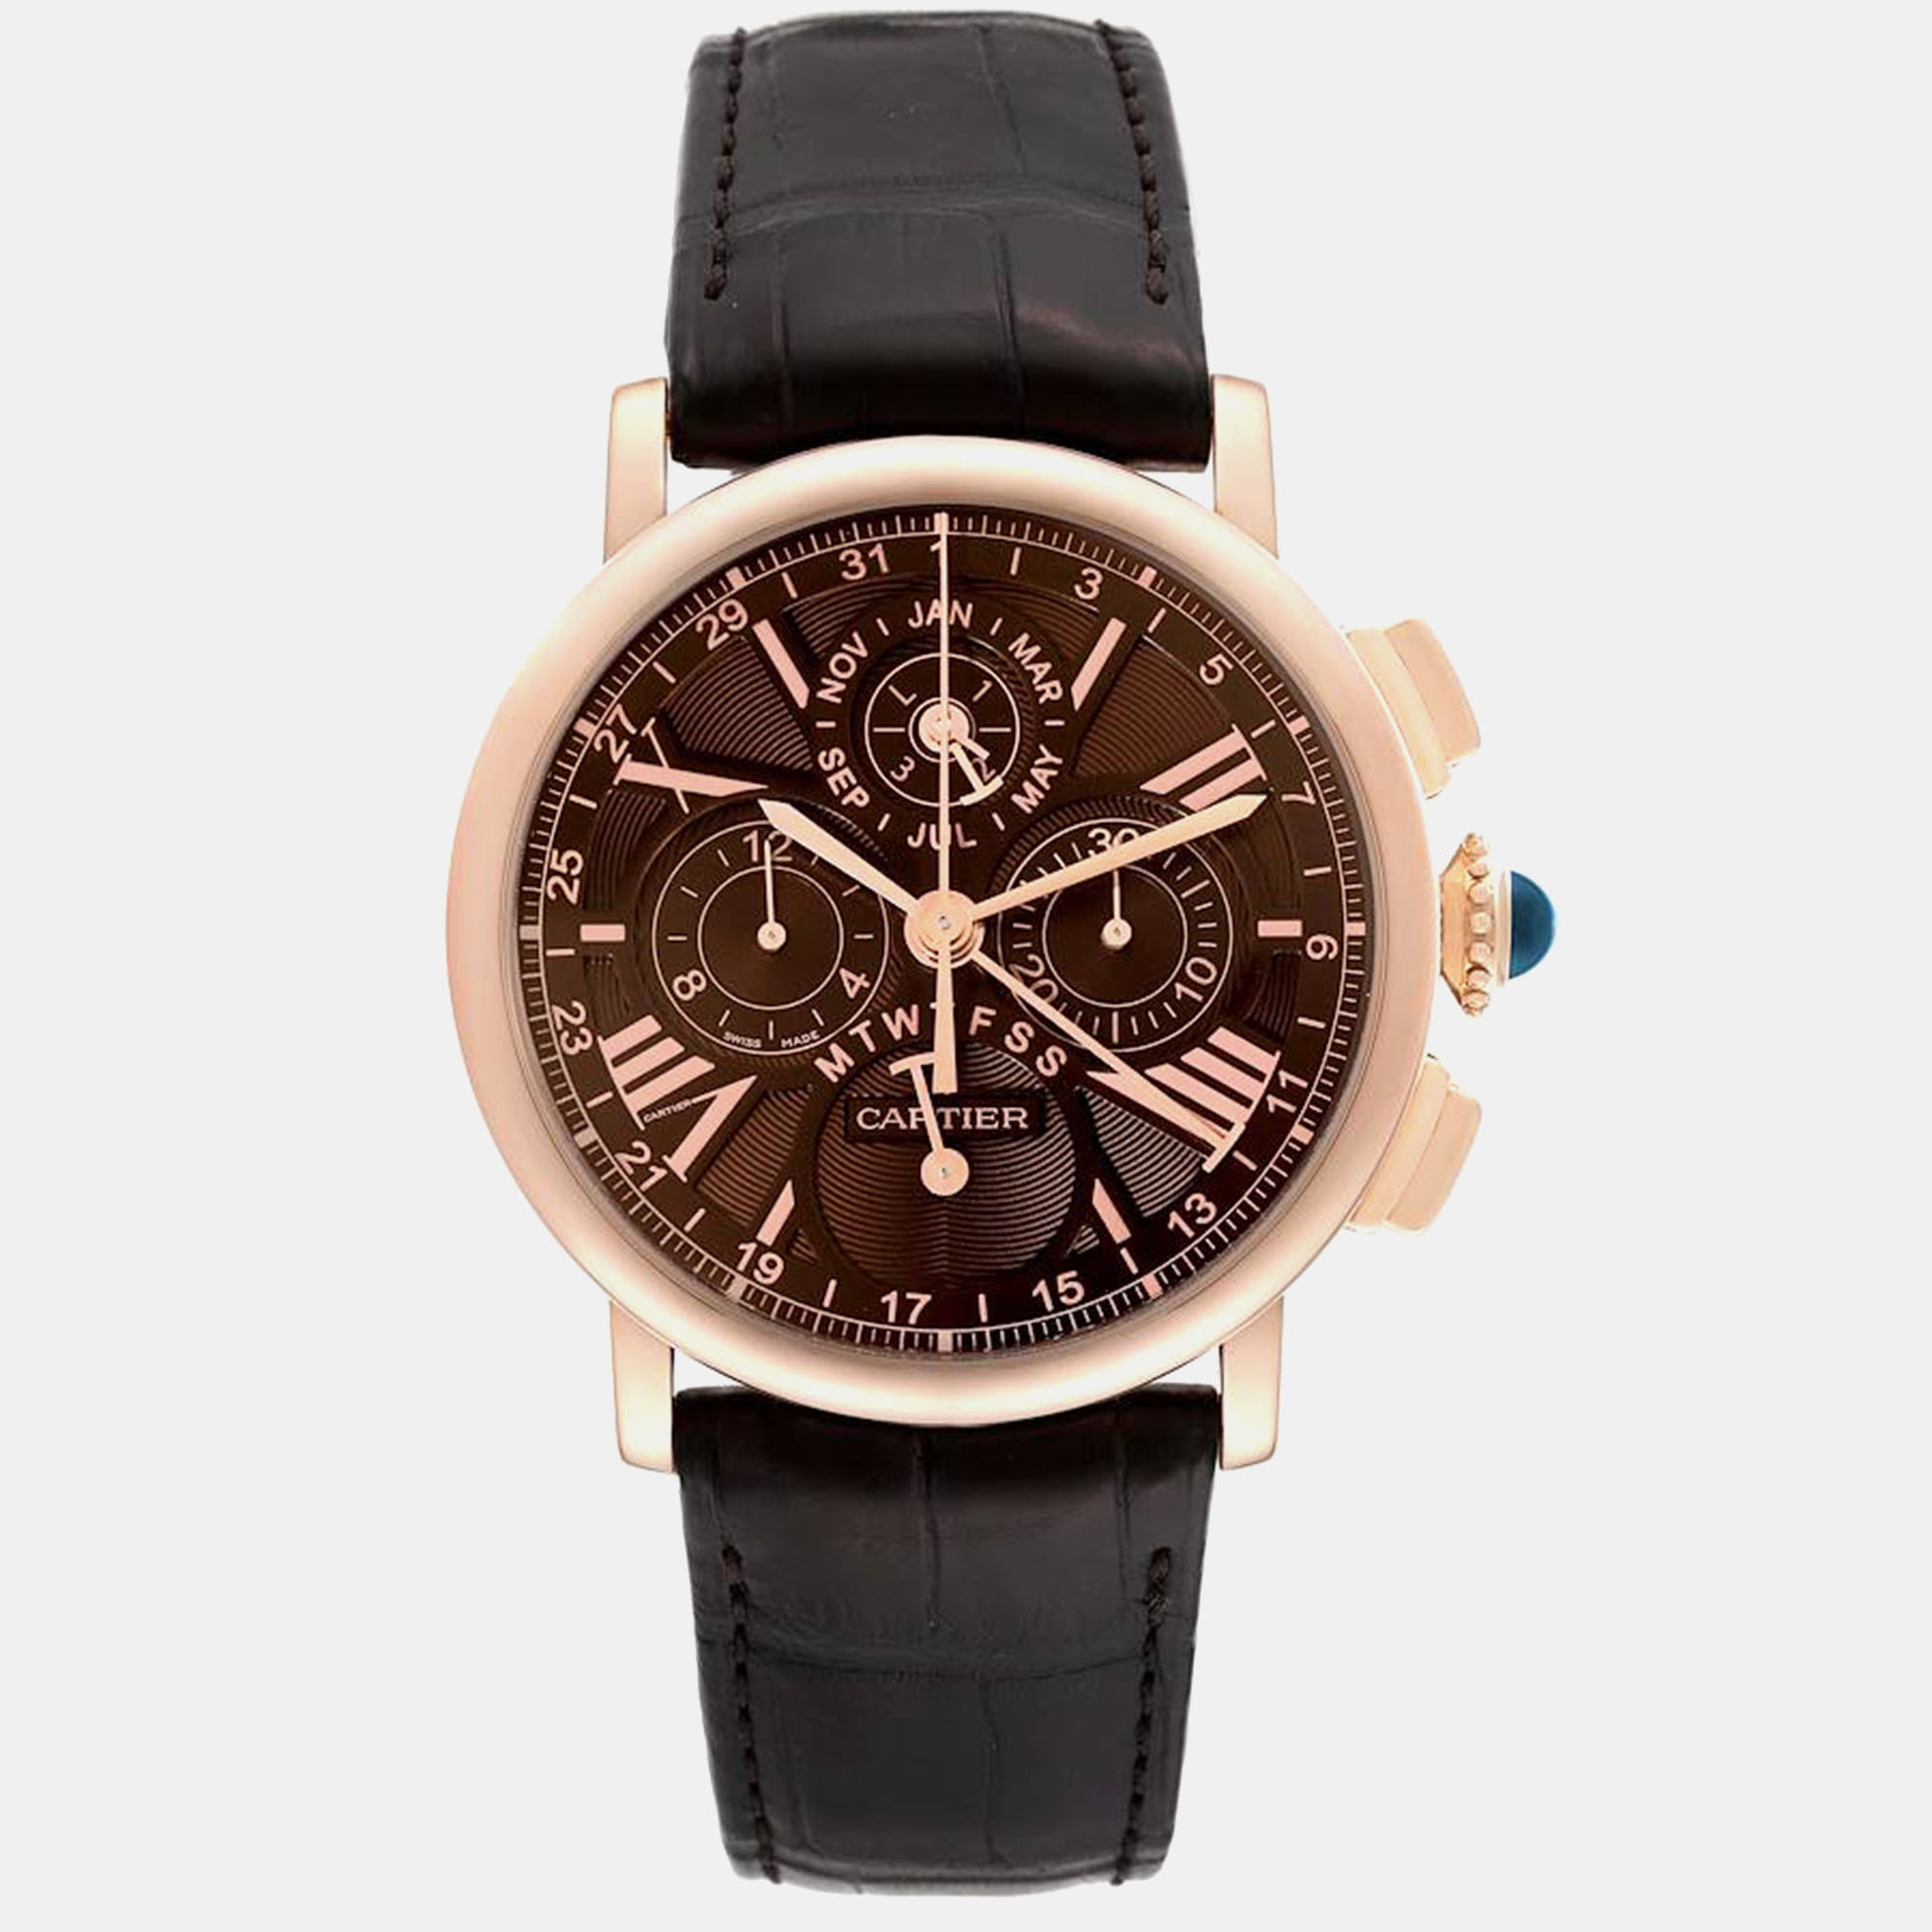 Cartier rotonde perpetual calendar chronograph rose gold men's watch w1556225 42 mm